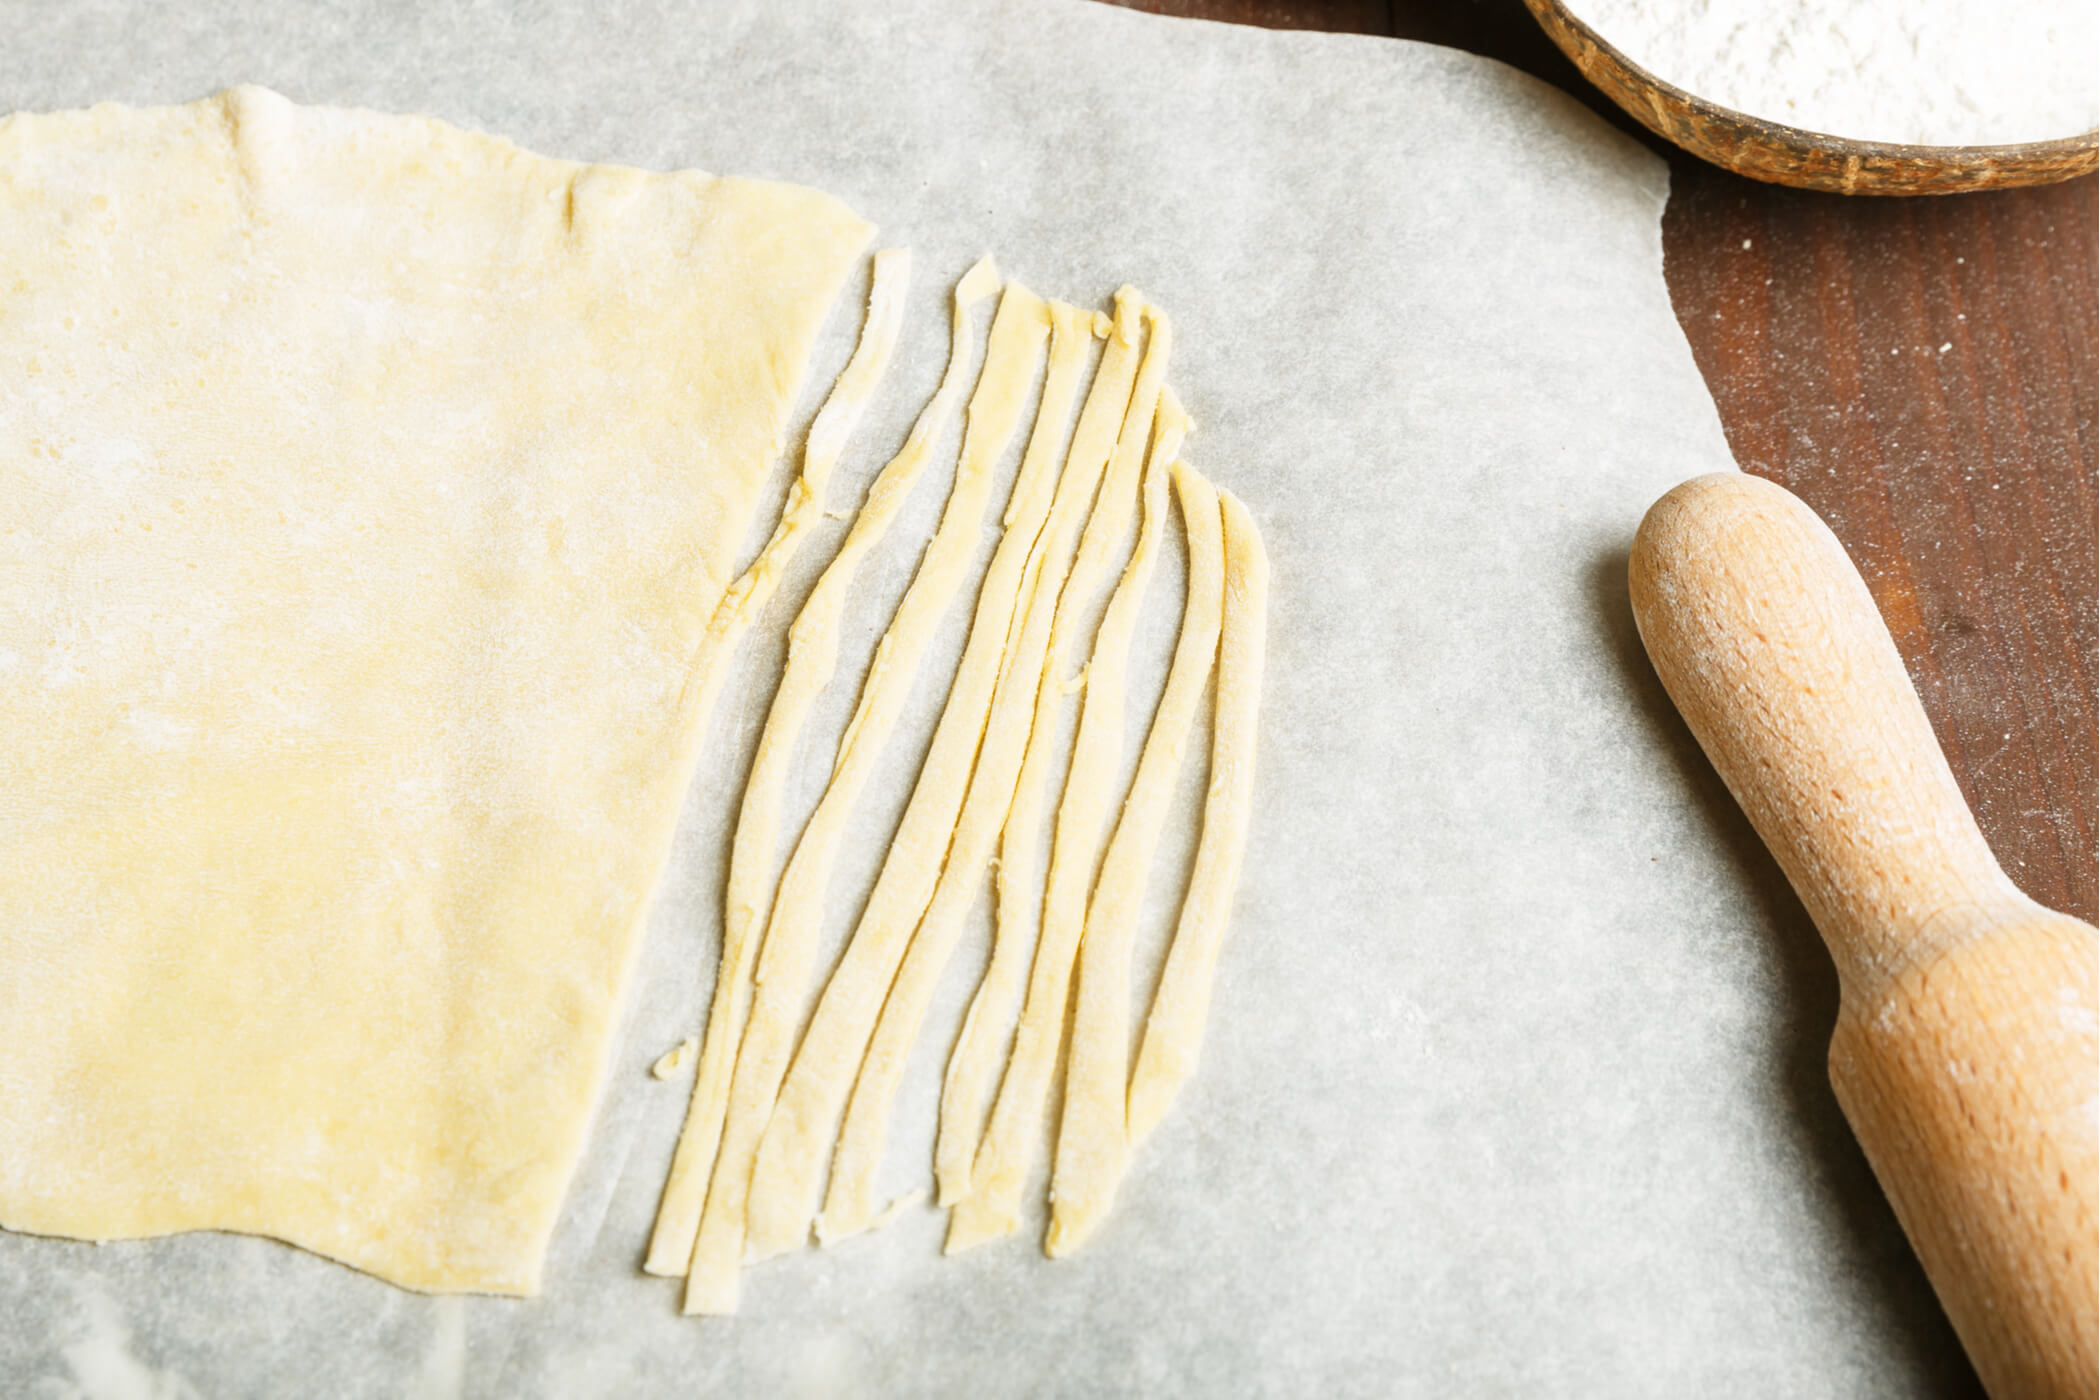 cut fresh pasta dough